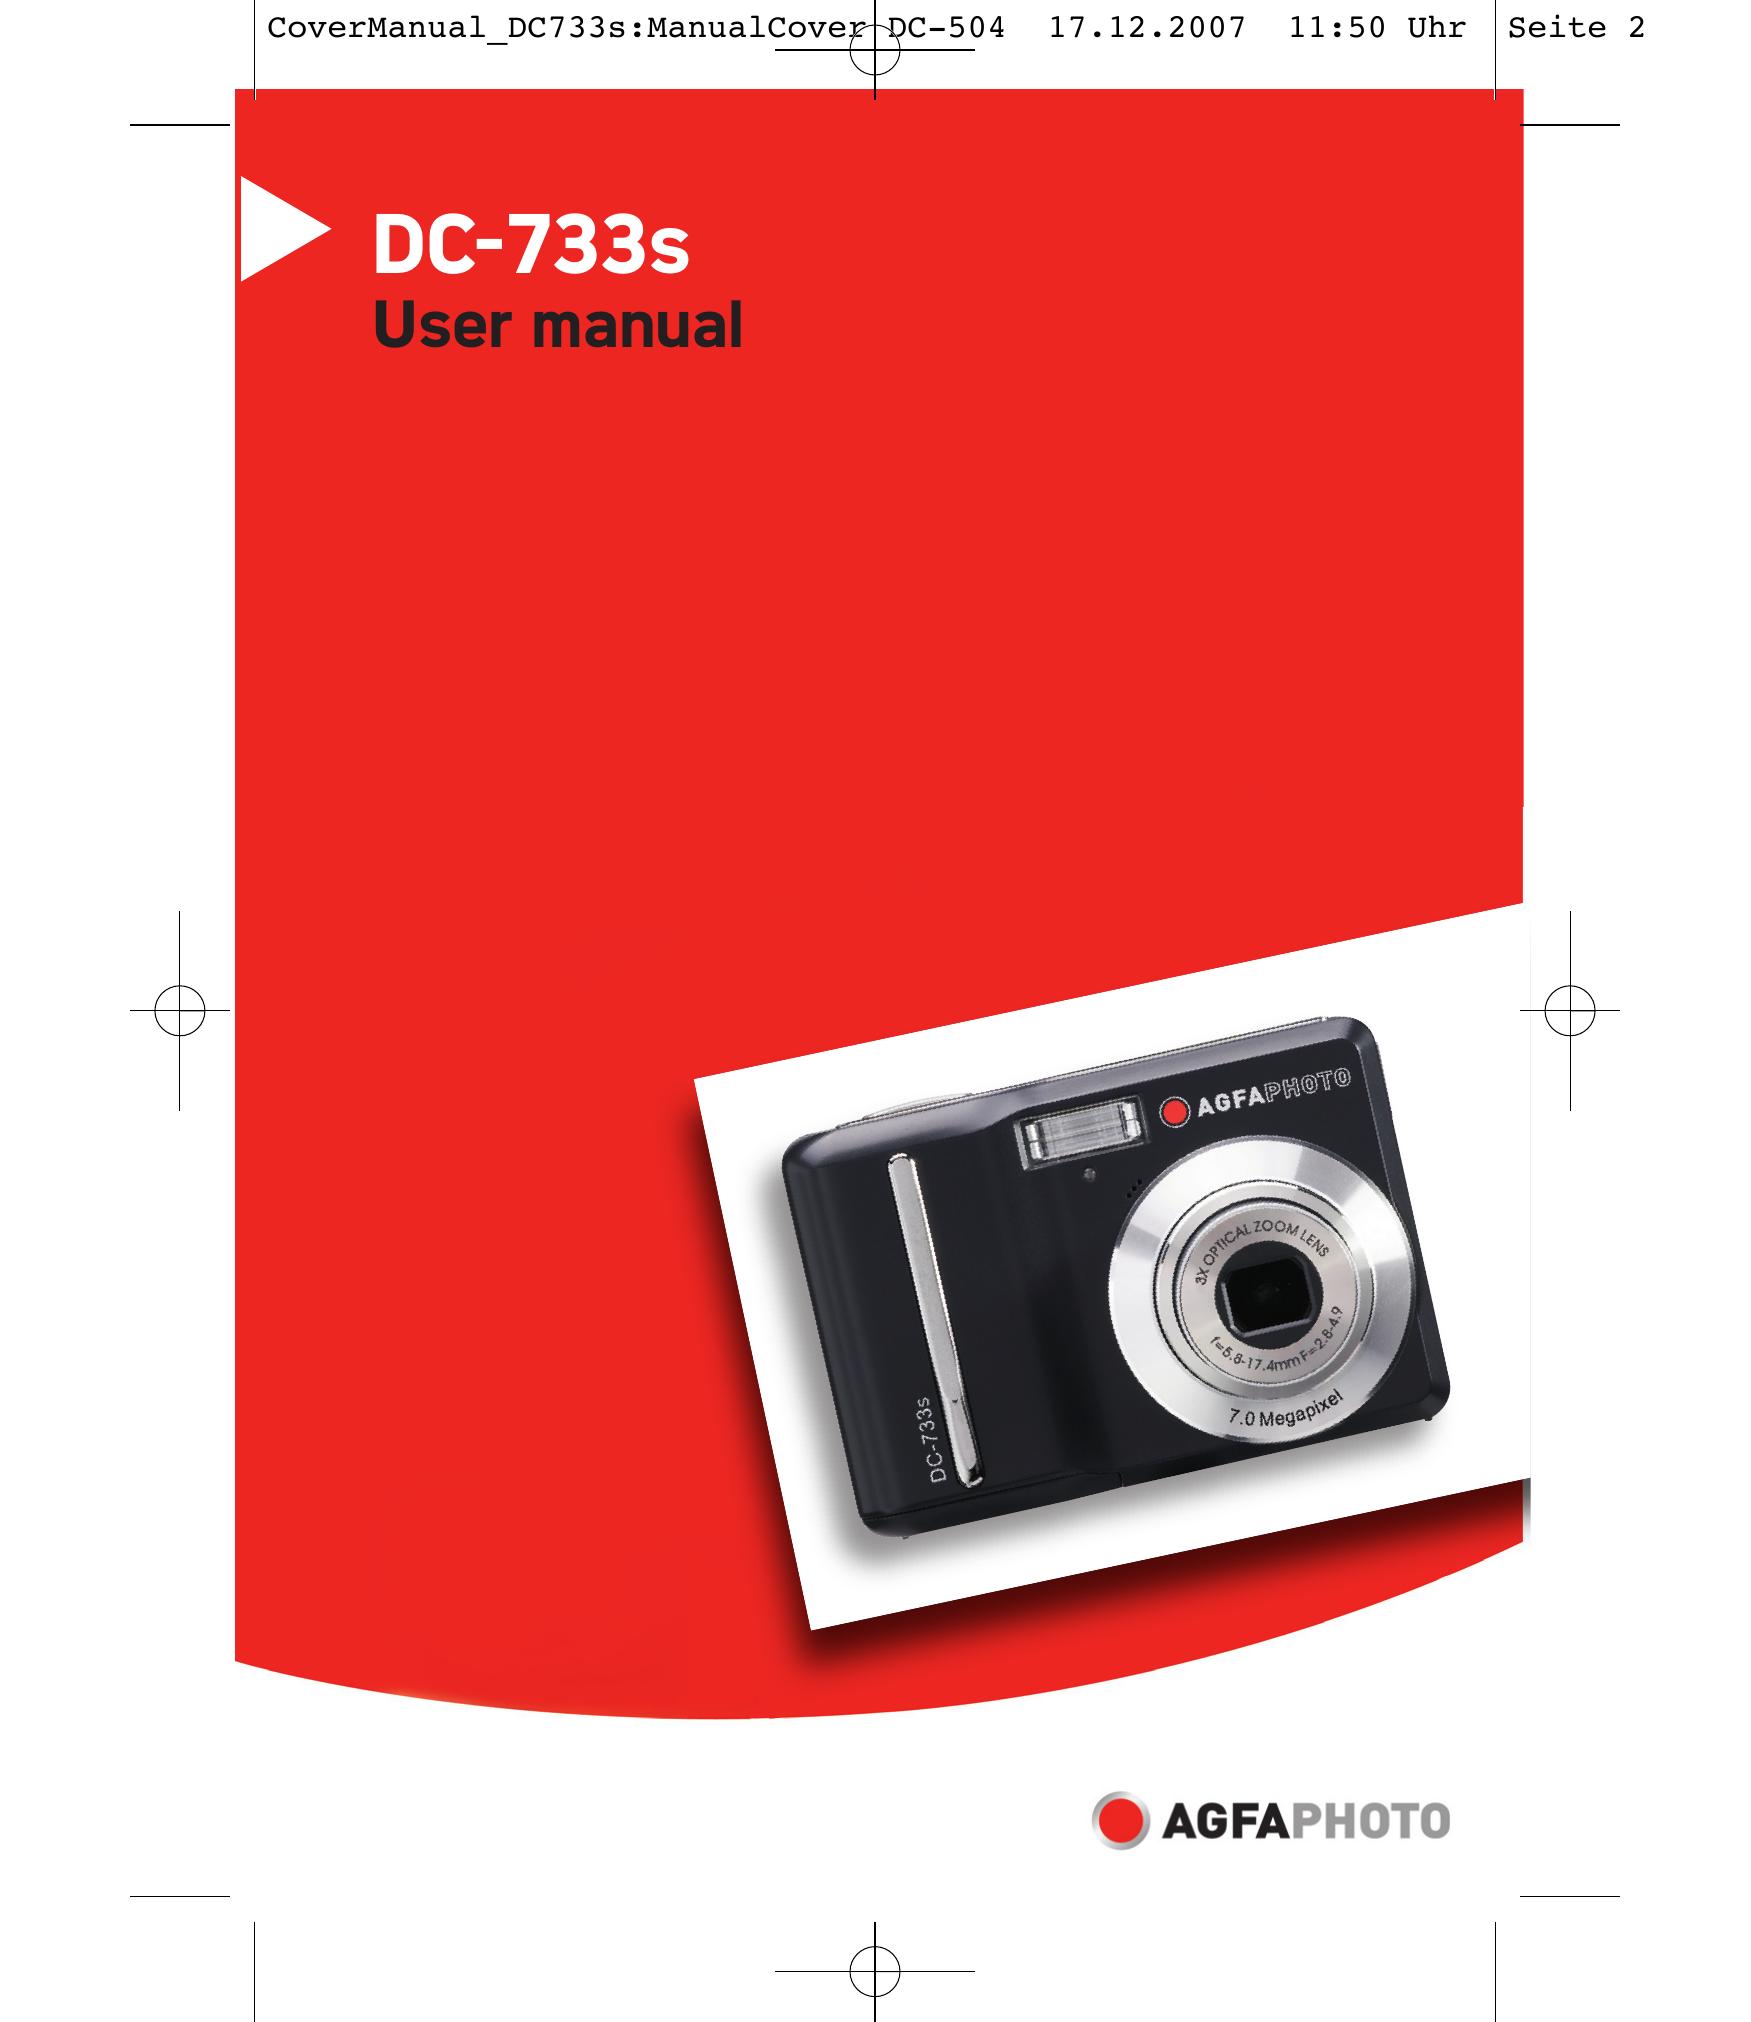 AGFA DC-733s Digital Camera User Manual